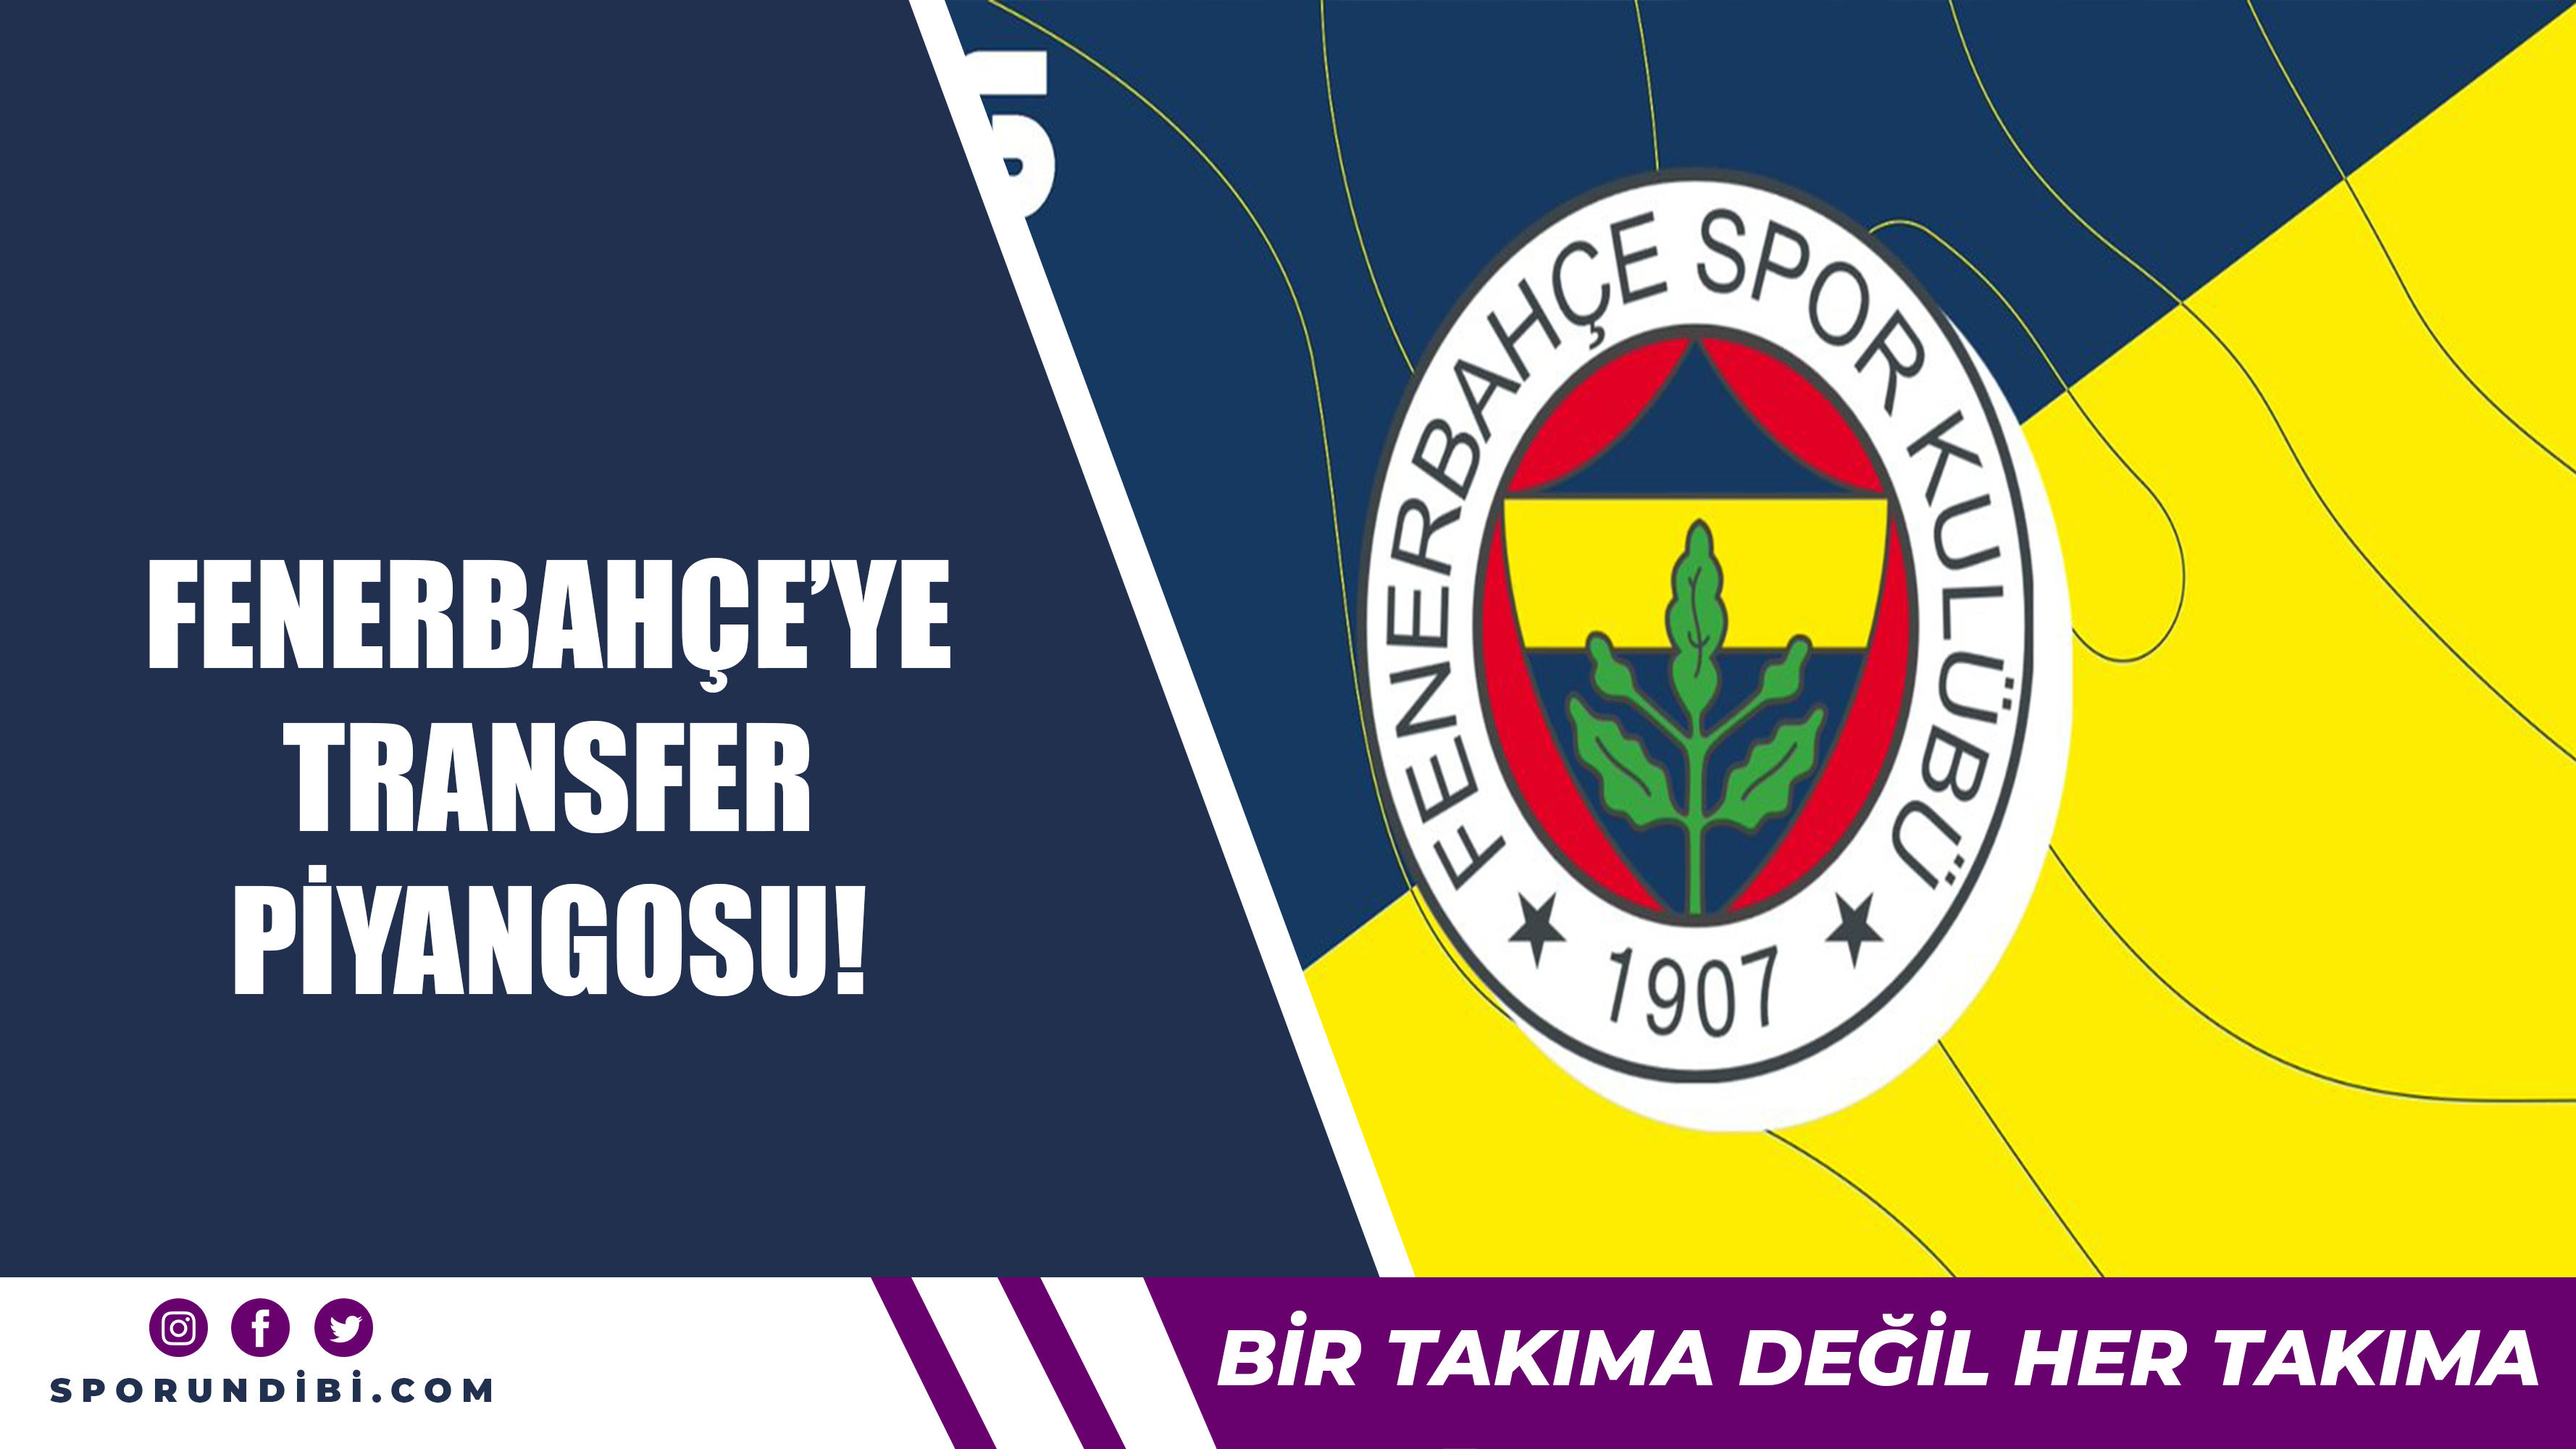 Fenerbahçe'ye transfer piyangosu!